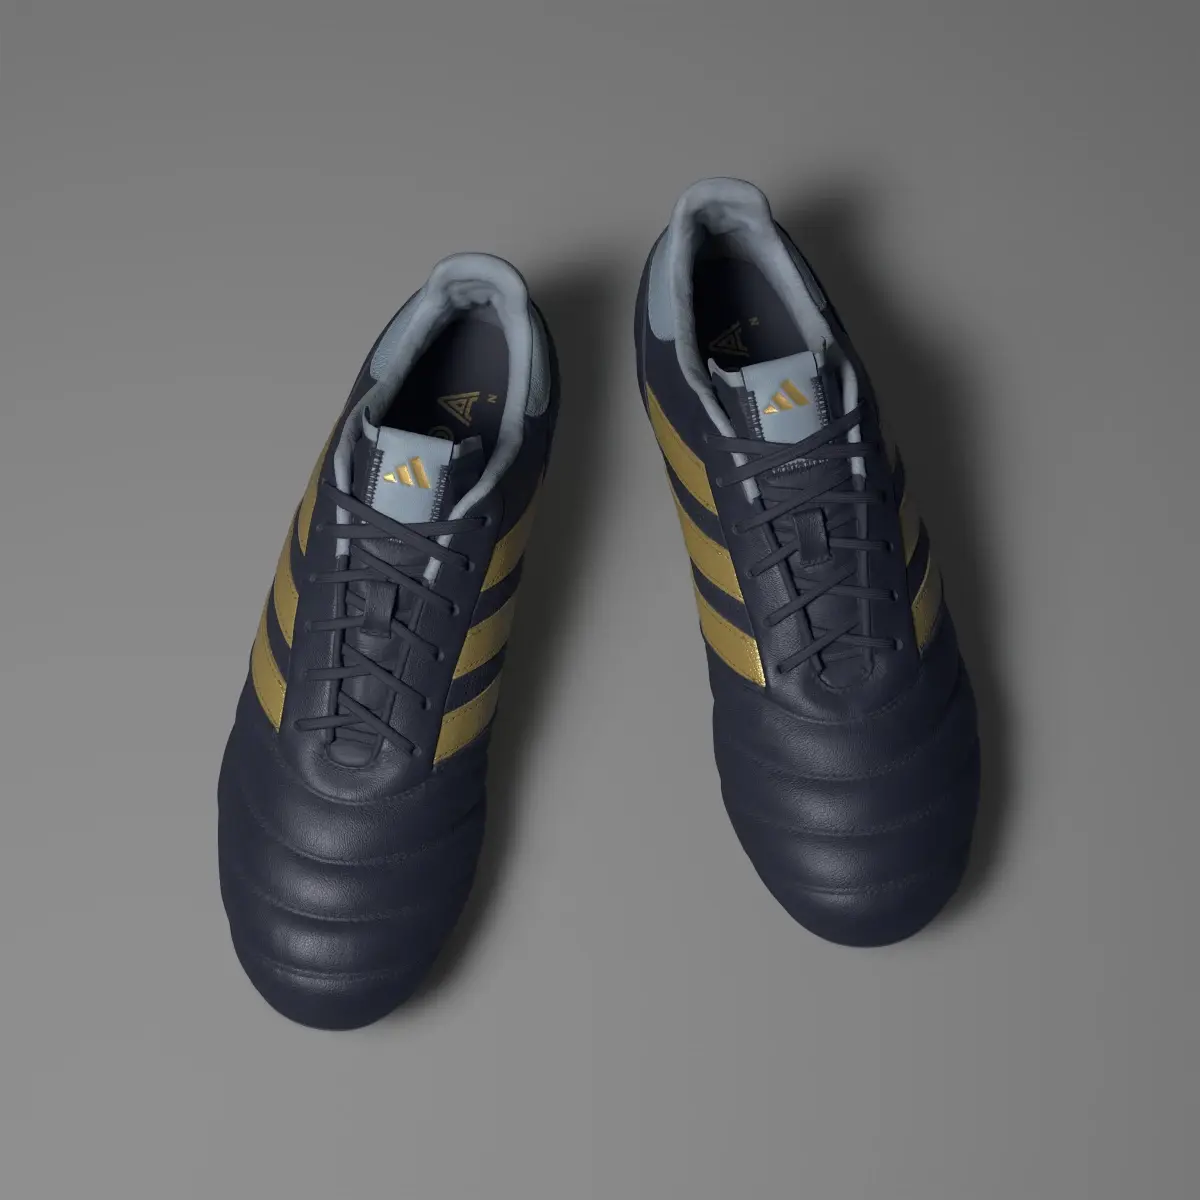 Adidas Chaussure Copa Icon Terrain souple. 3